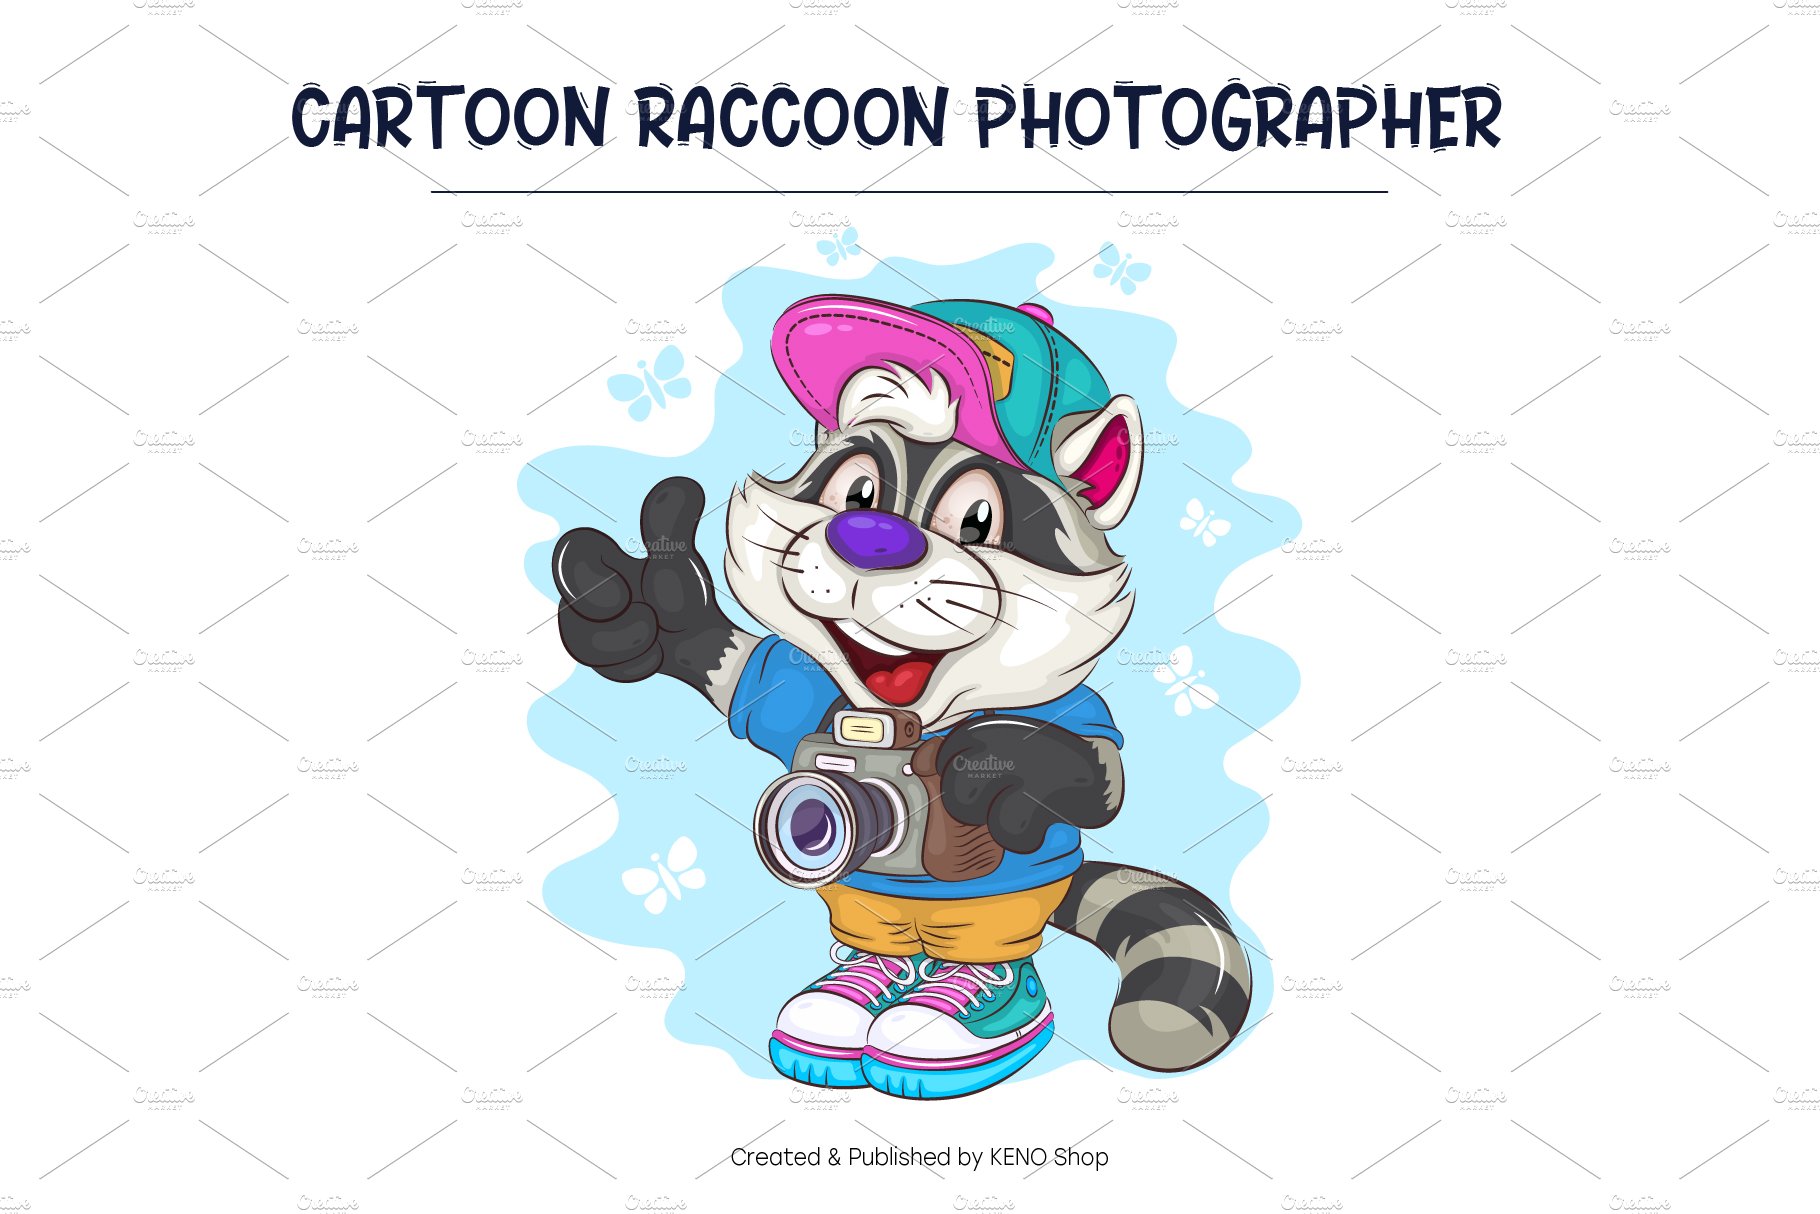 Cartoon Raccoon Photographer. preview image.